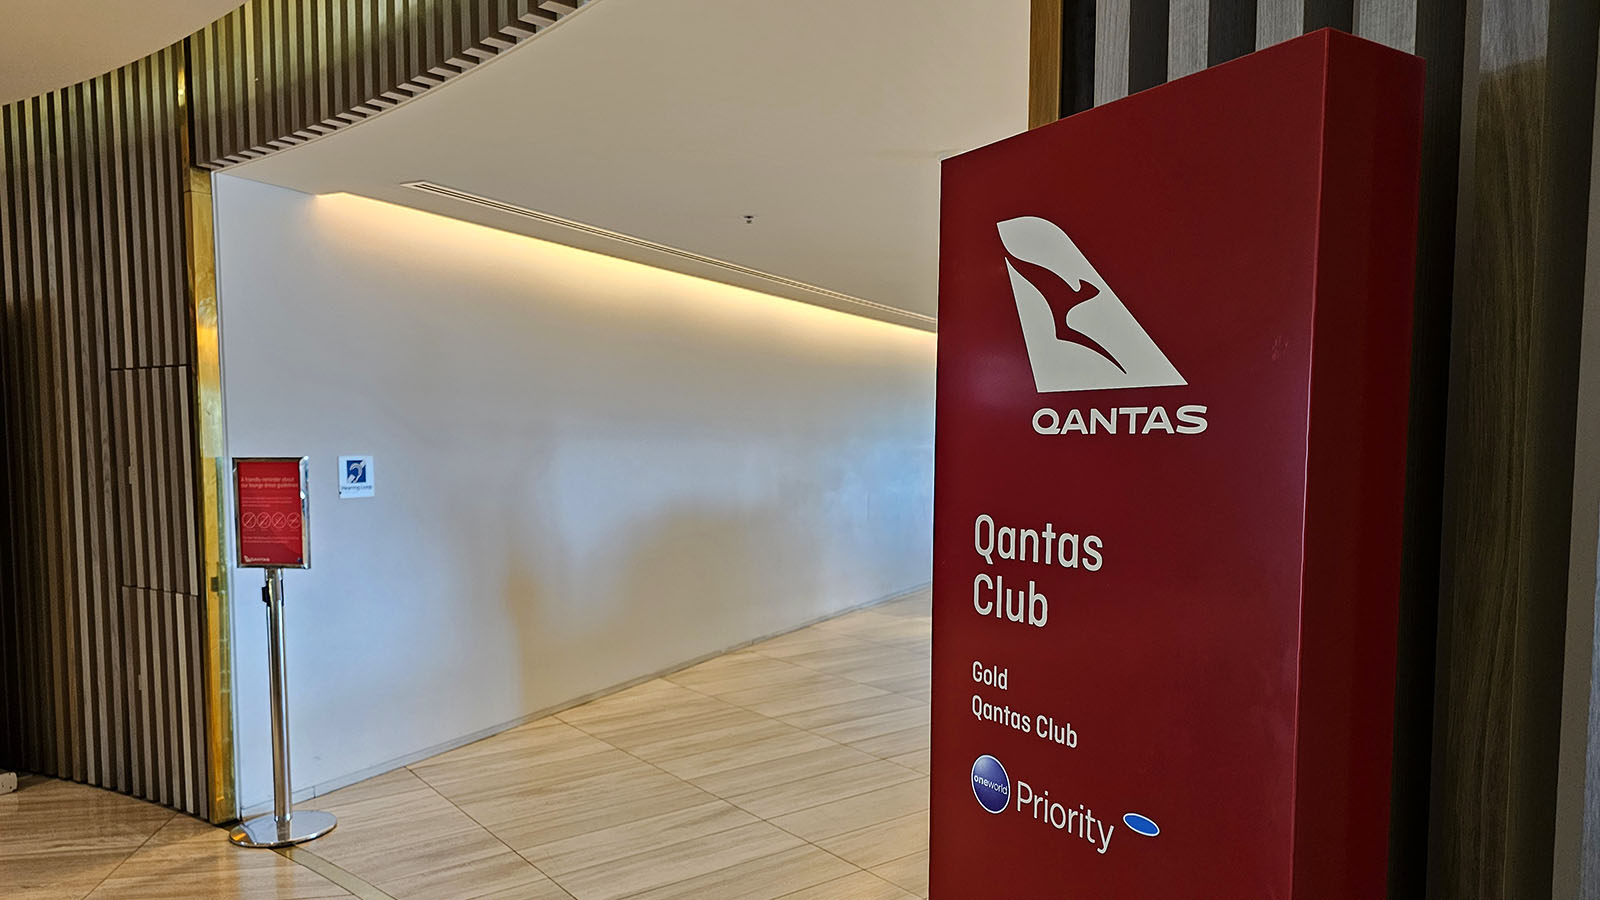 Entrance to the Qantas Club, Canberra